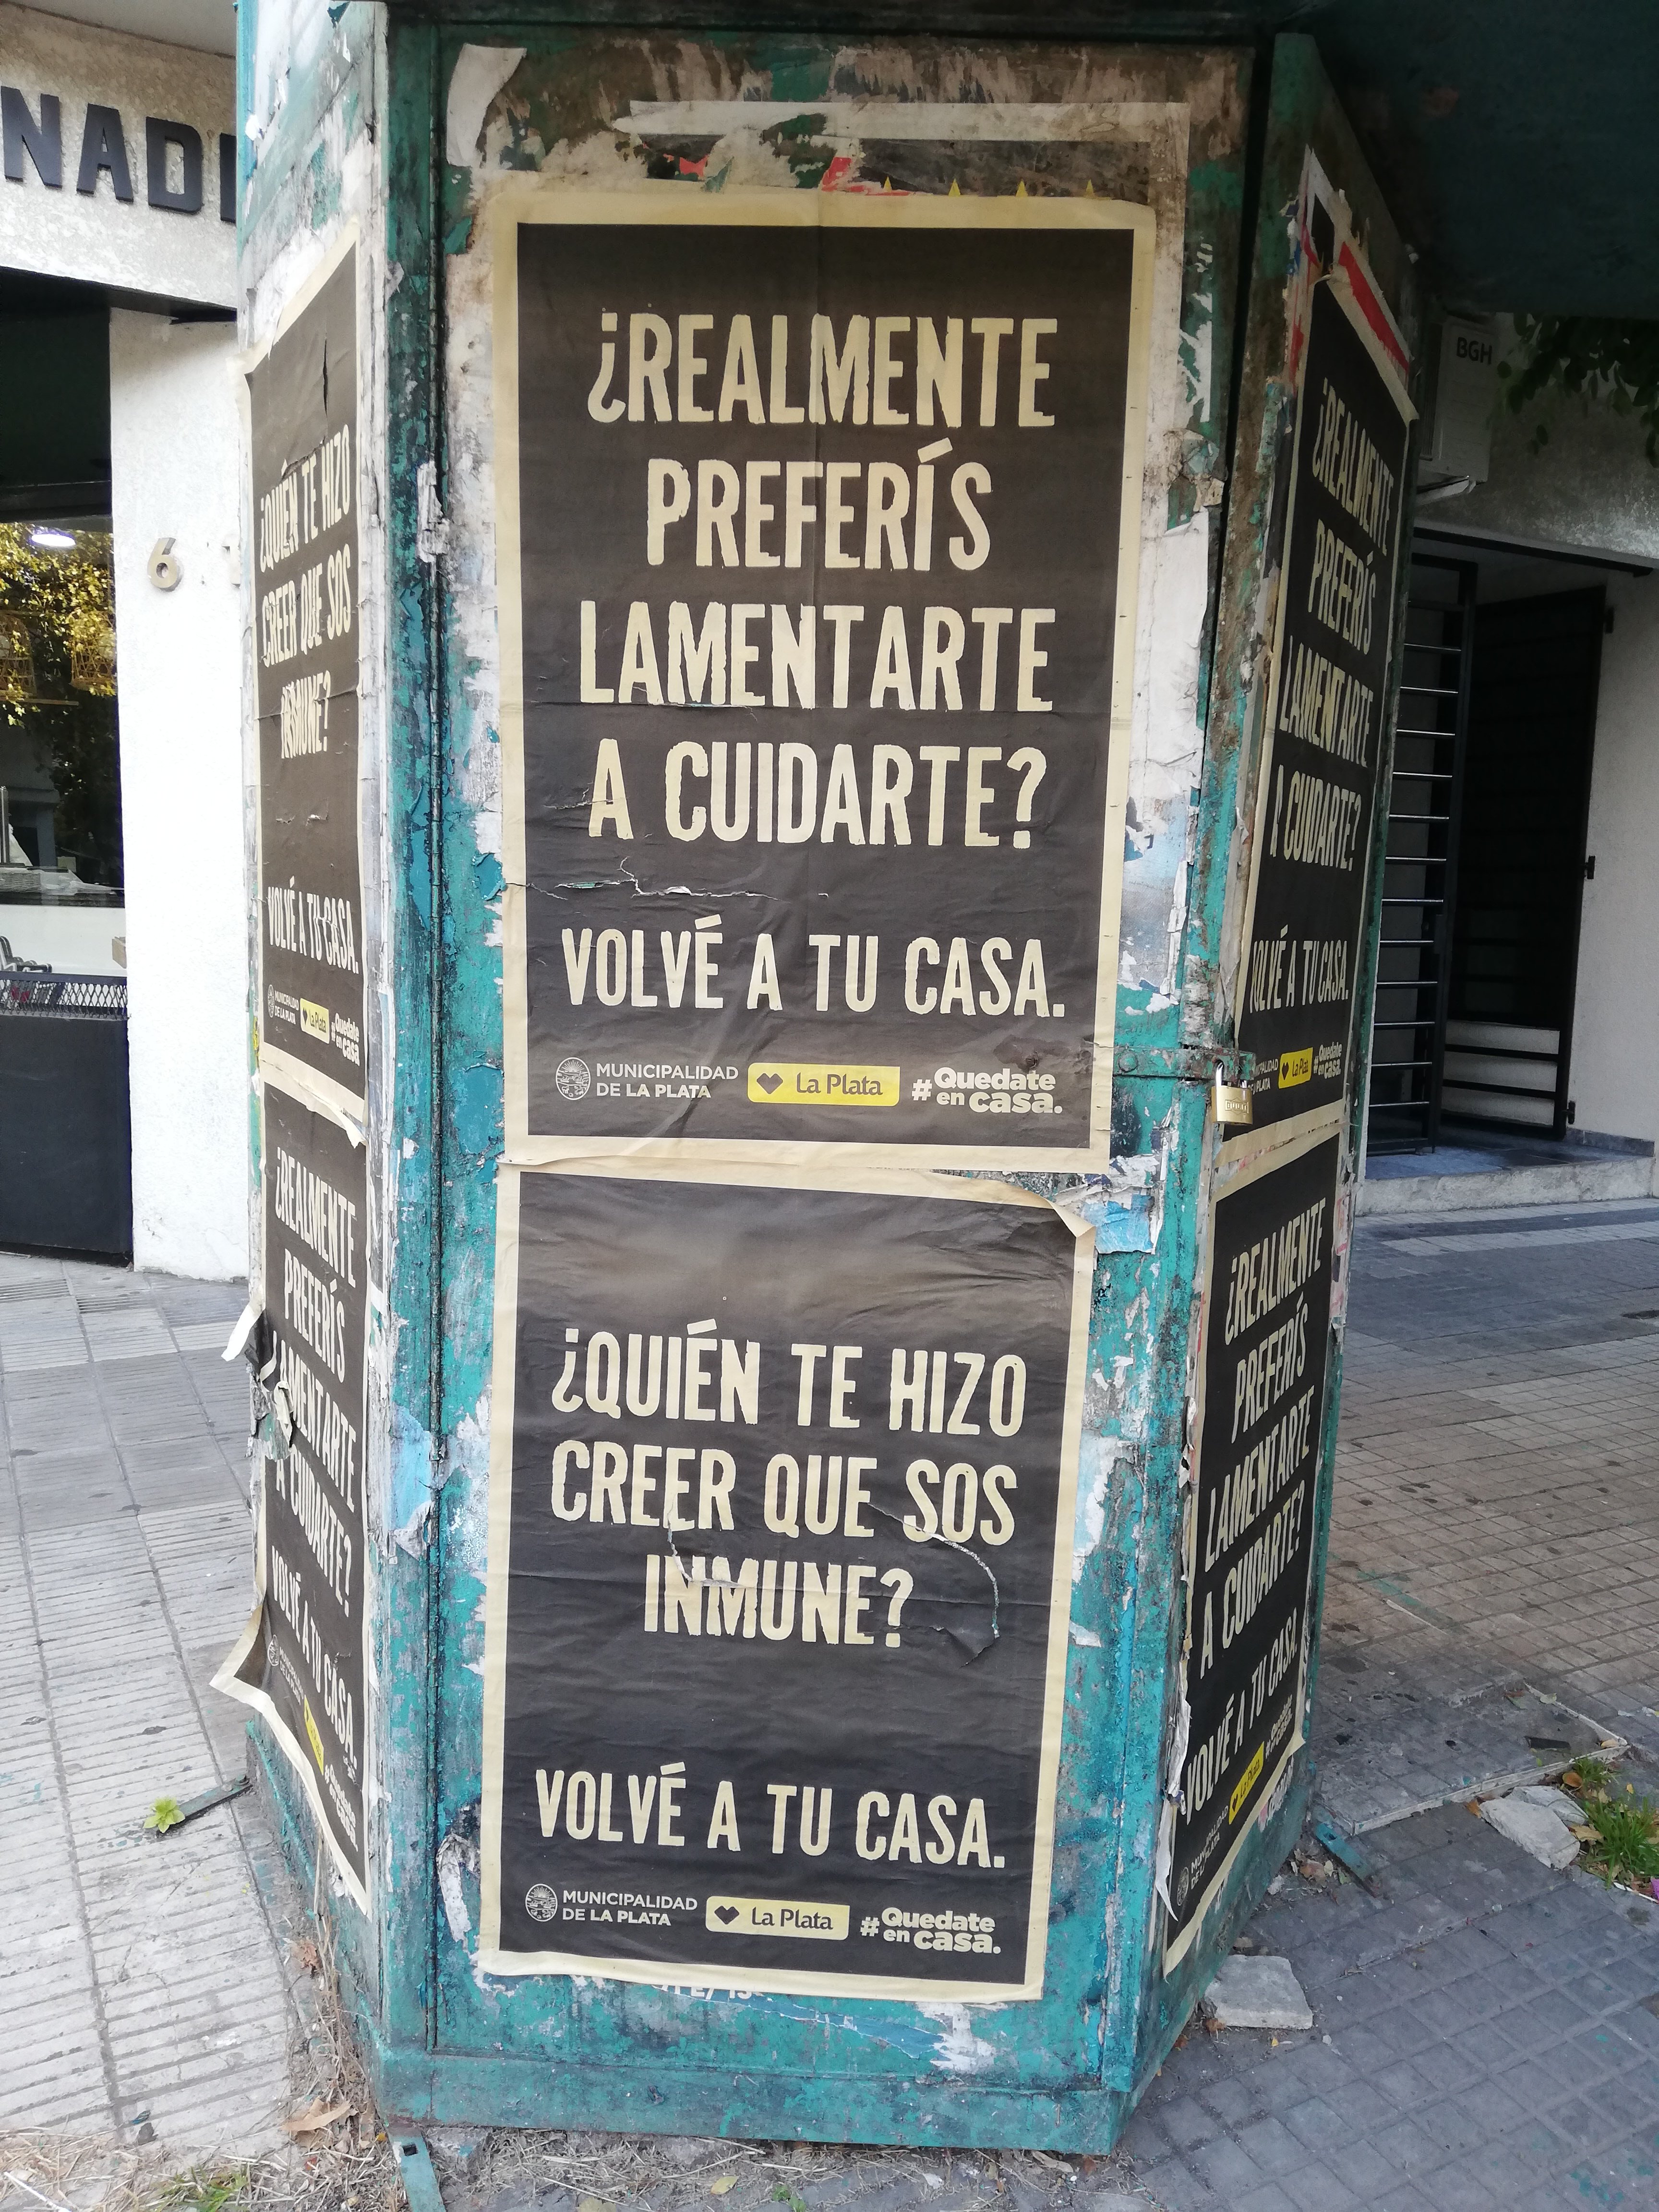 Afiches callejeros alertan sobre la importancia de cumplir la cuarentena. | Foto: Wikipedia